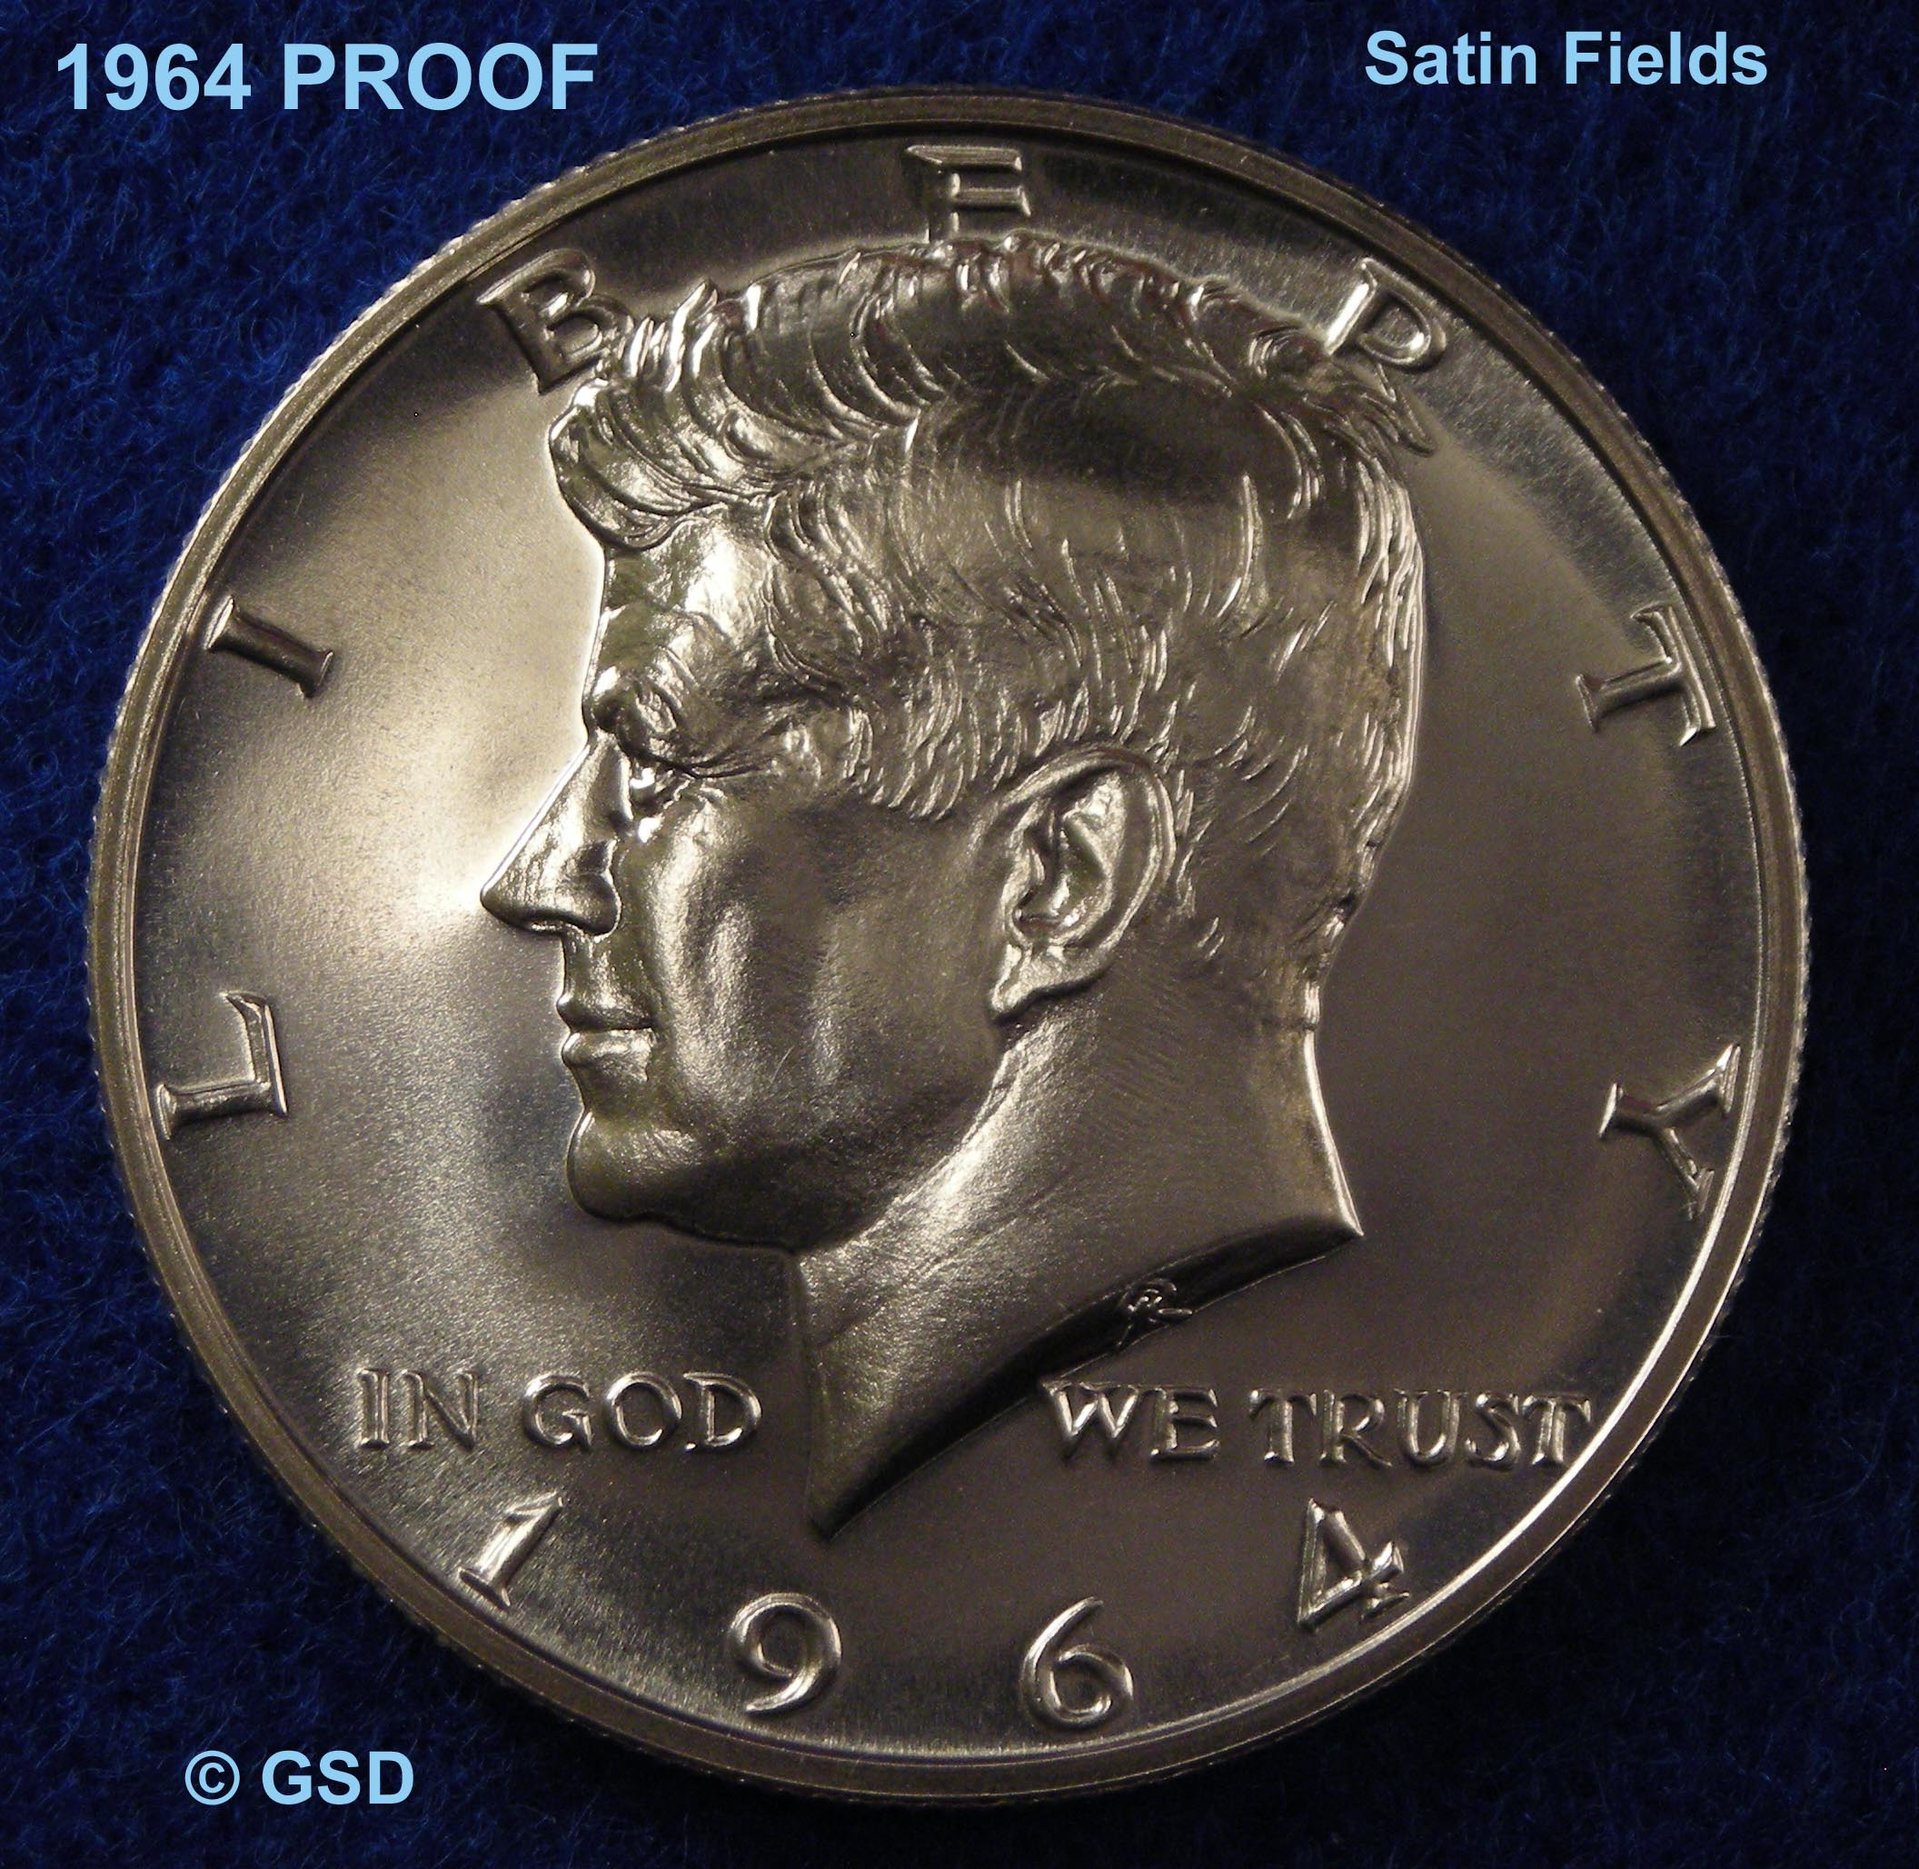 Satin Finish Kennedy Halves | Coin Talk